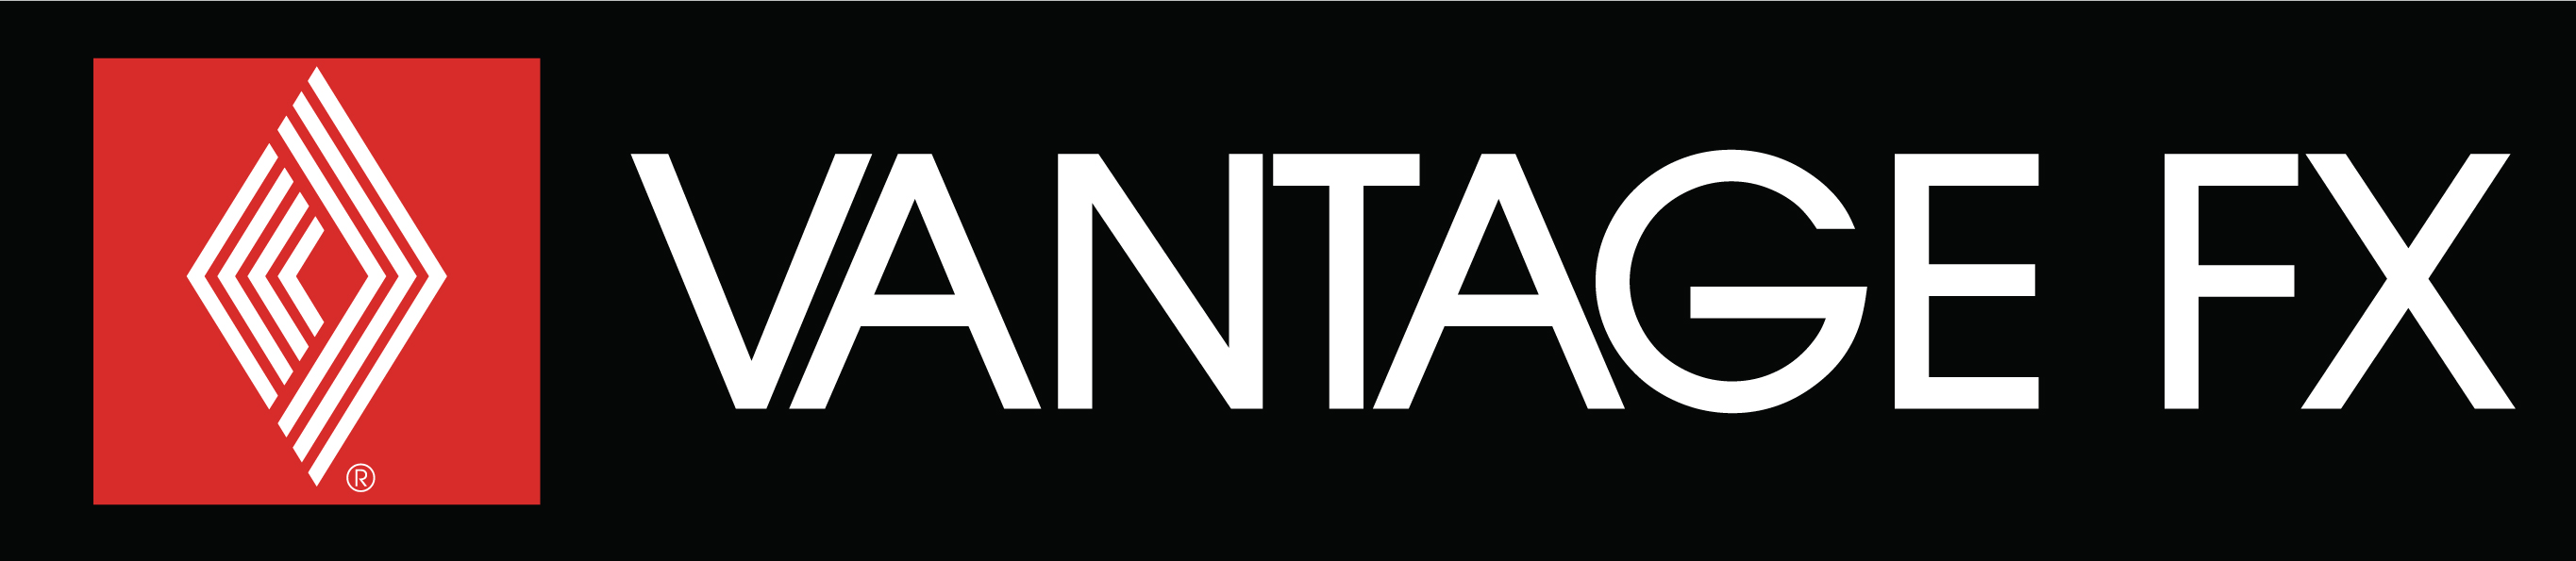 Vantage FX Logo